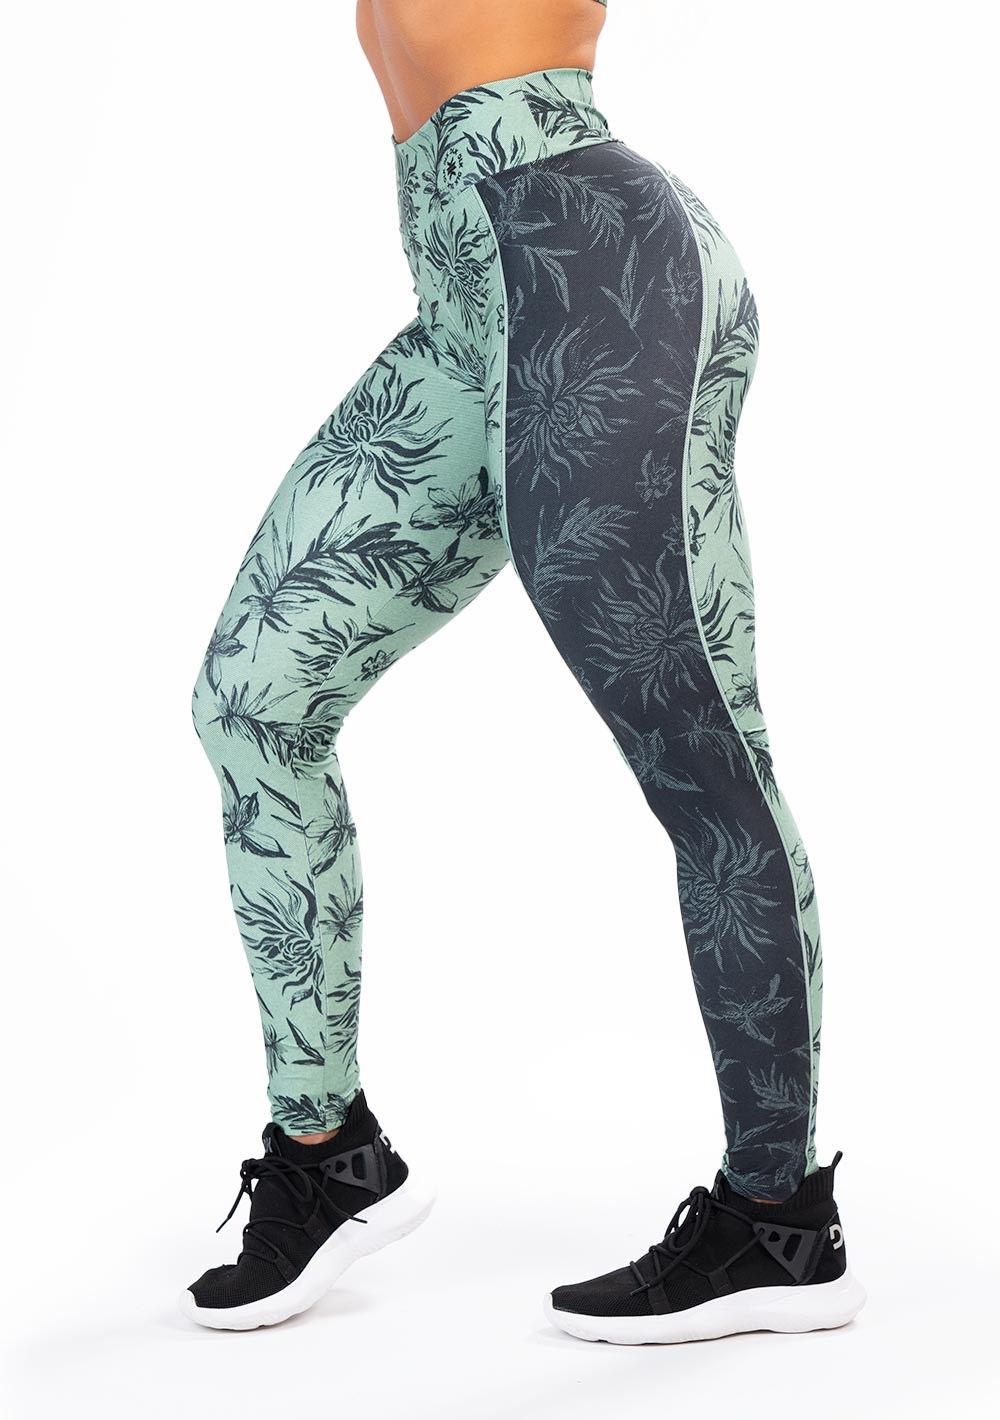 Legging fitness feminina new printed estampada stencil verde